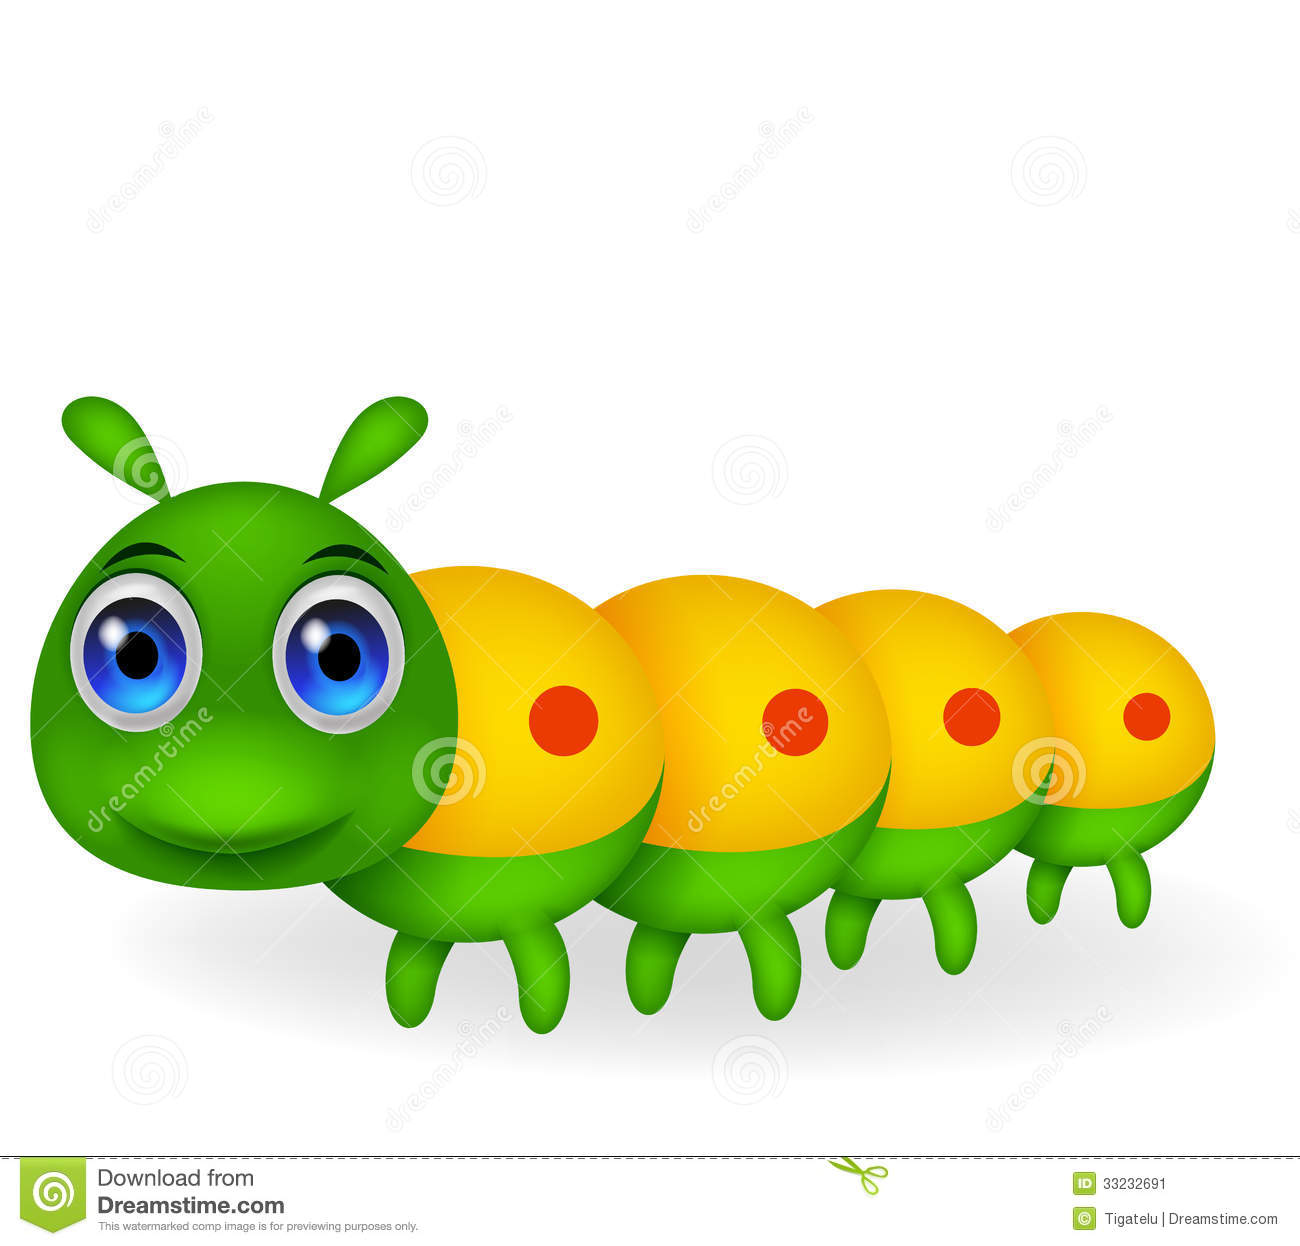 Cute Green Caterpillar Cartoon Stock Image   Image  33232691